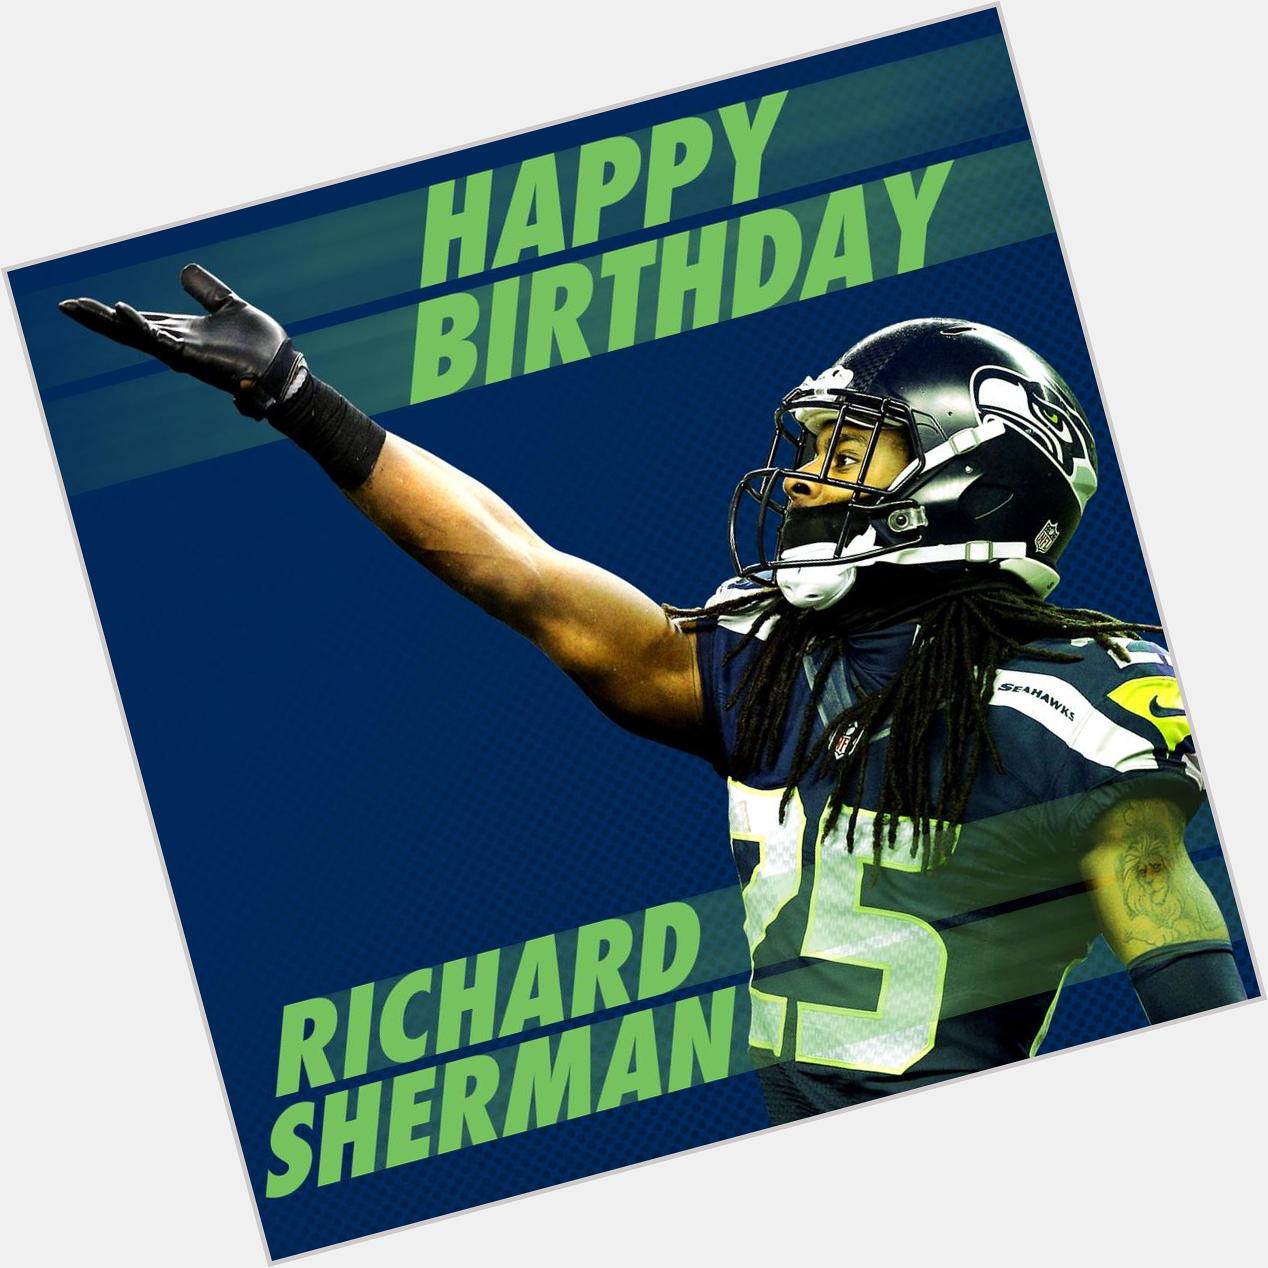 Happy birthday Richard Sherman 27 years old 